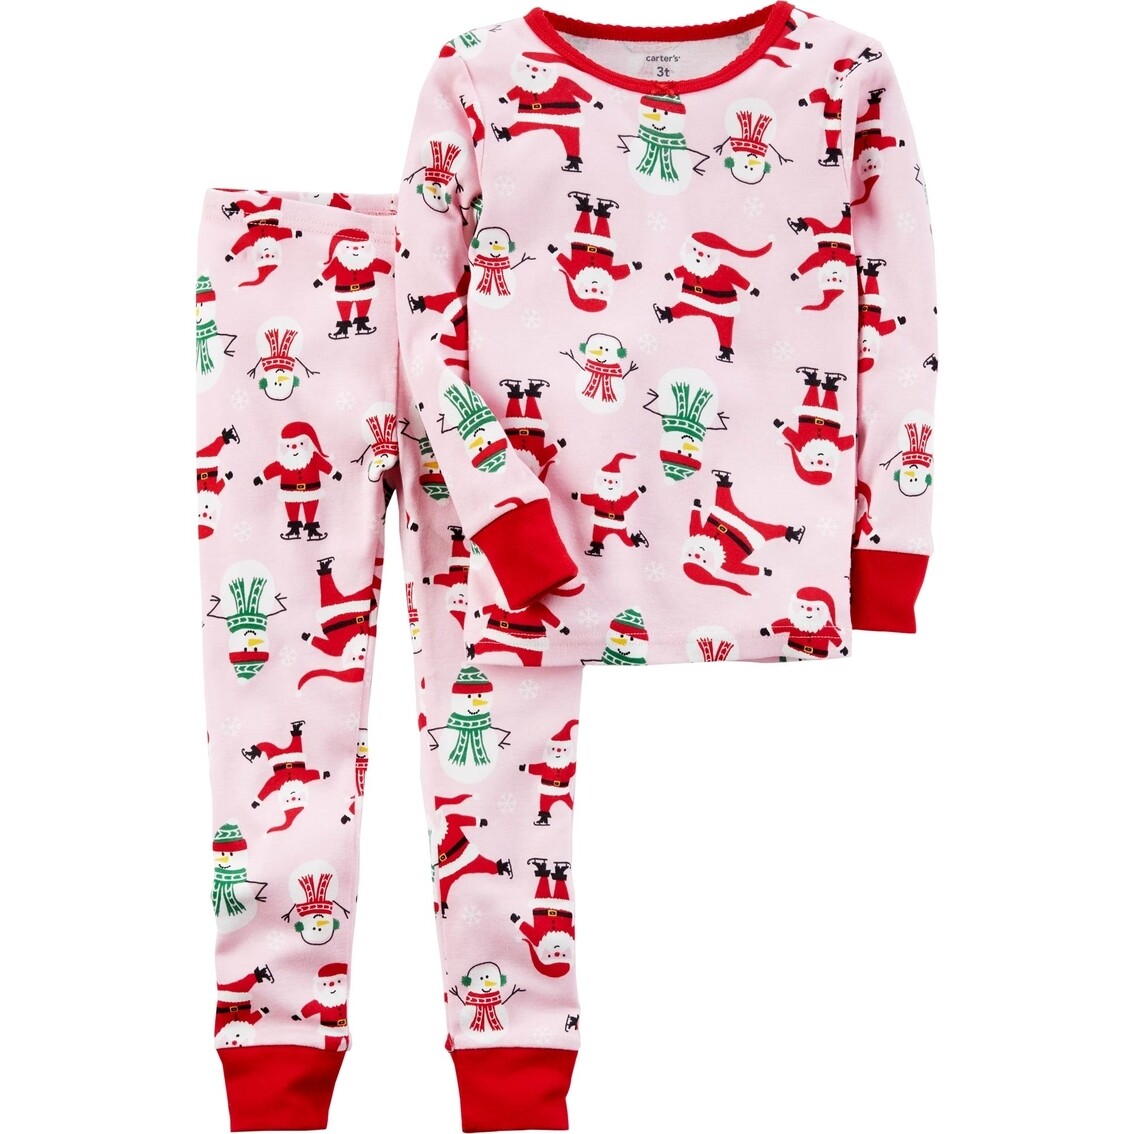 Original Carter's Baby Girls Holiday Pajama Set